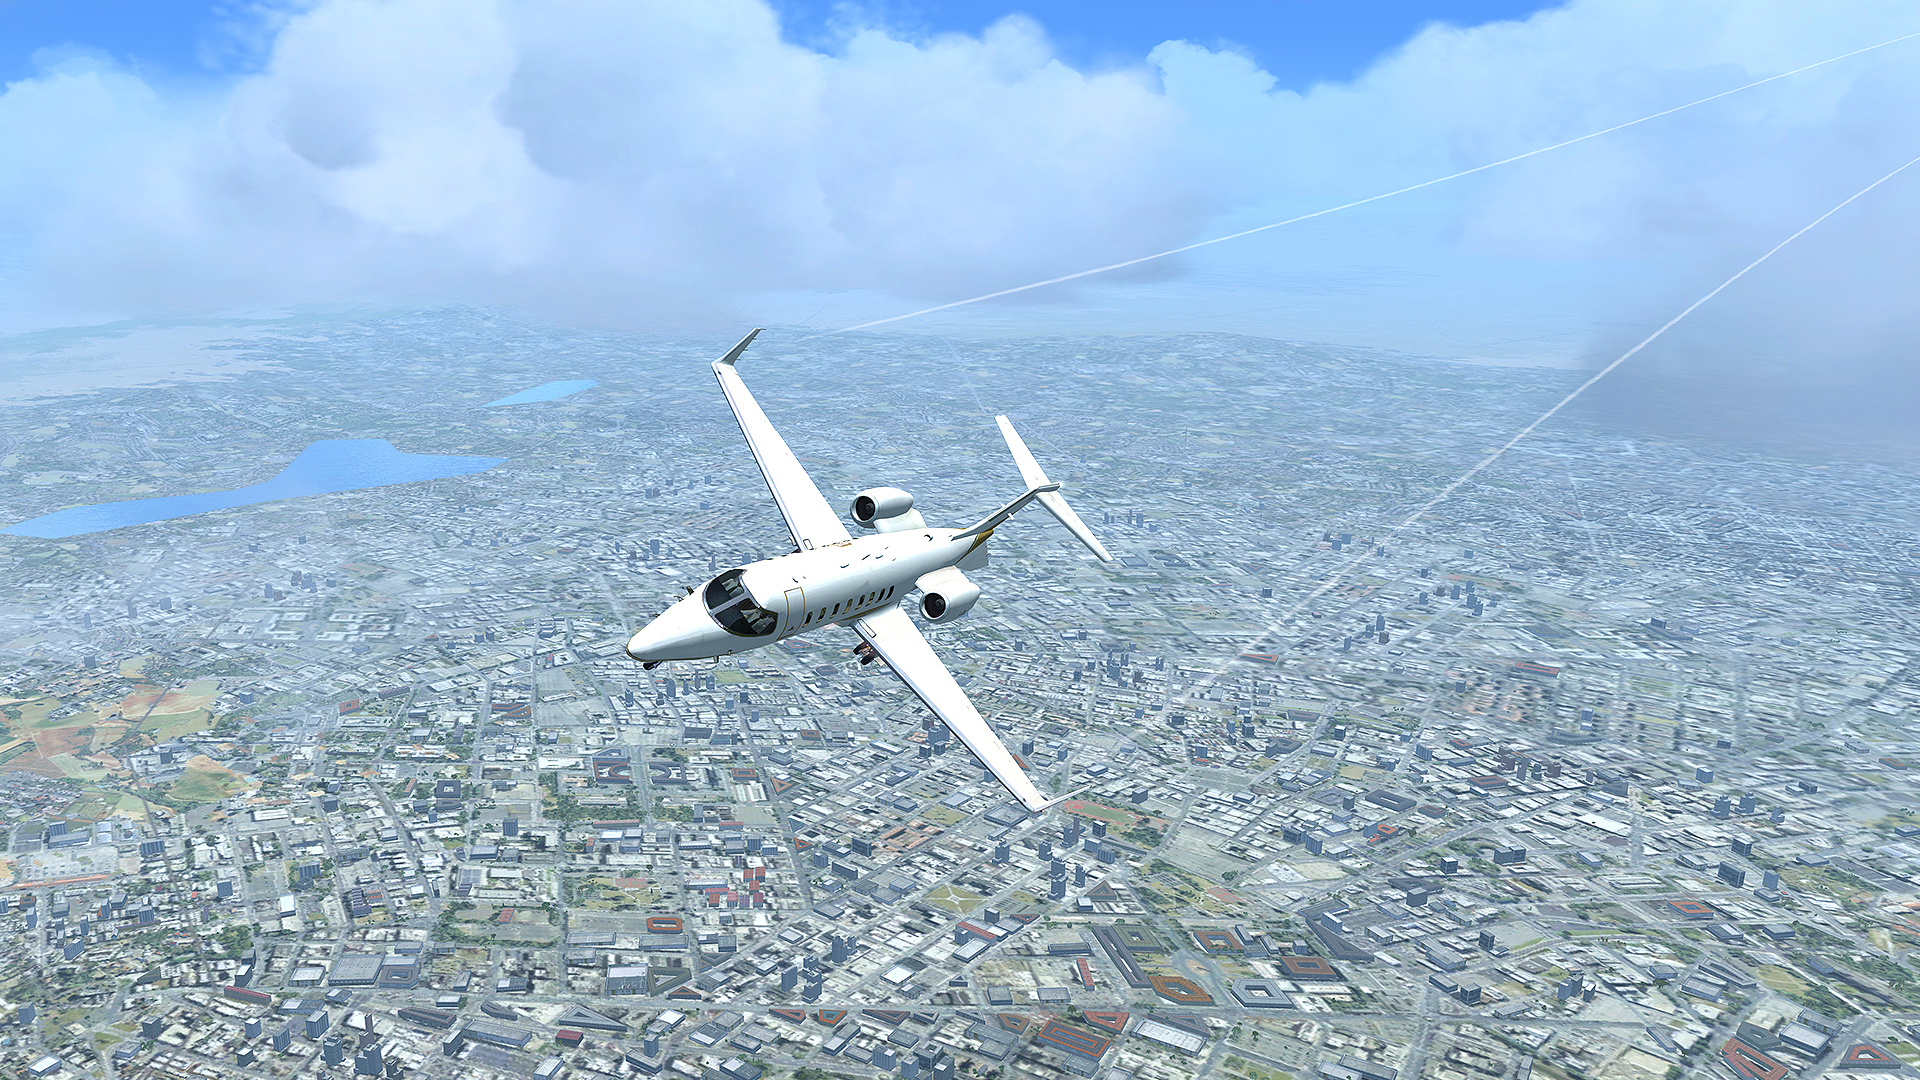 microsoft flight simulator x graphics mods